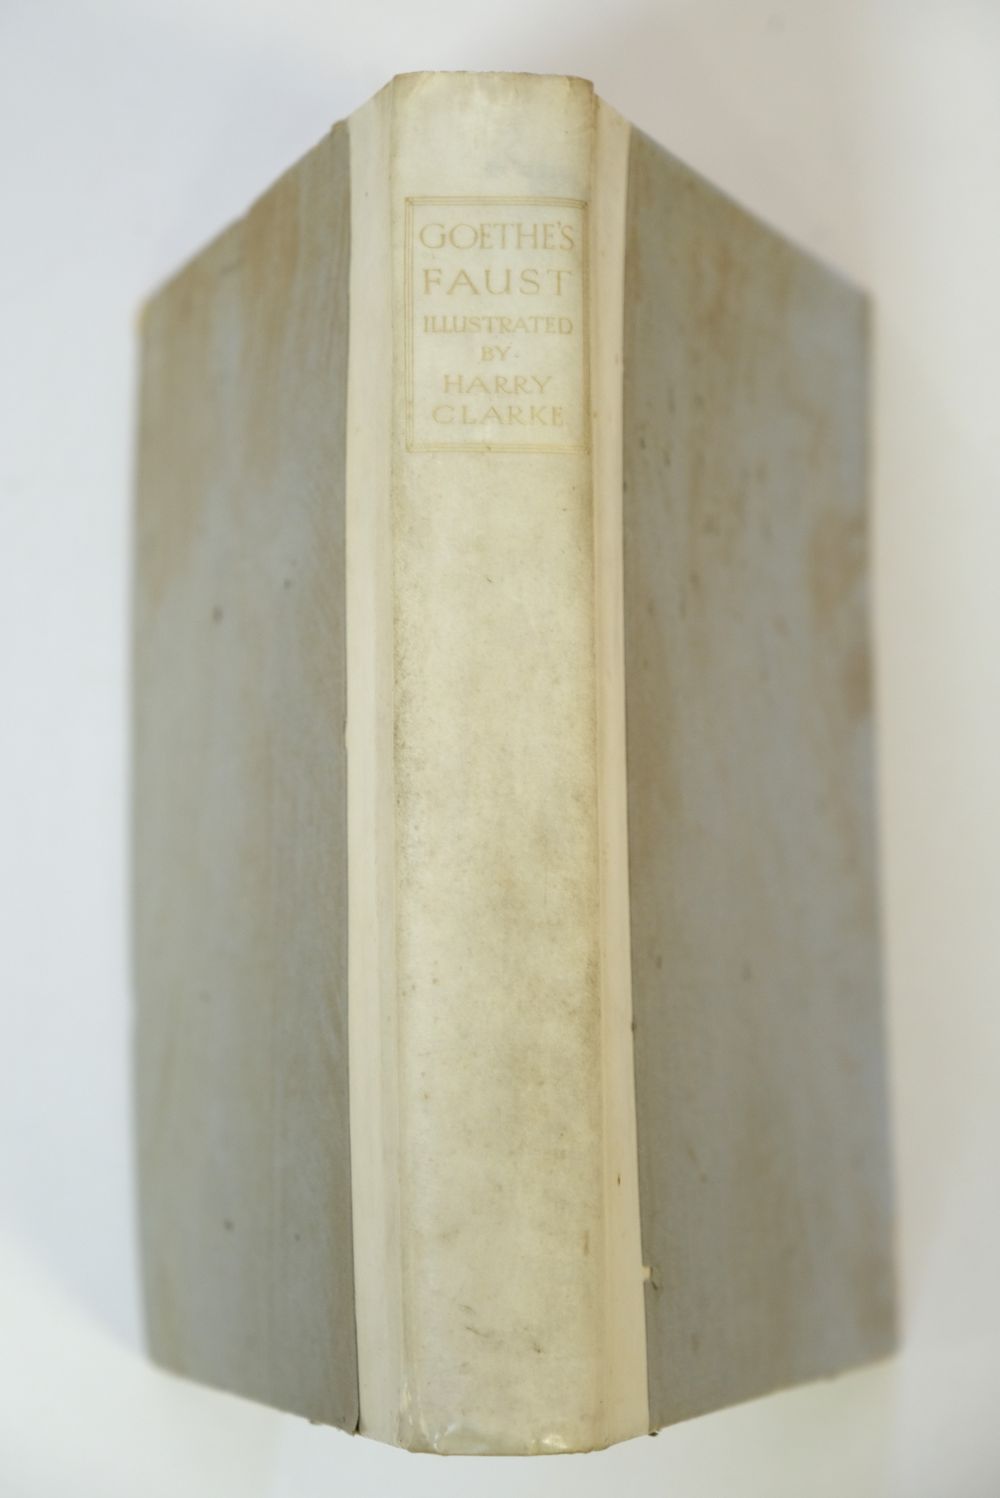 Clarke (Harry, illustrator). Faust, by Goethe, 1925 - Image 4 of 11